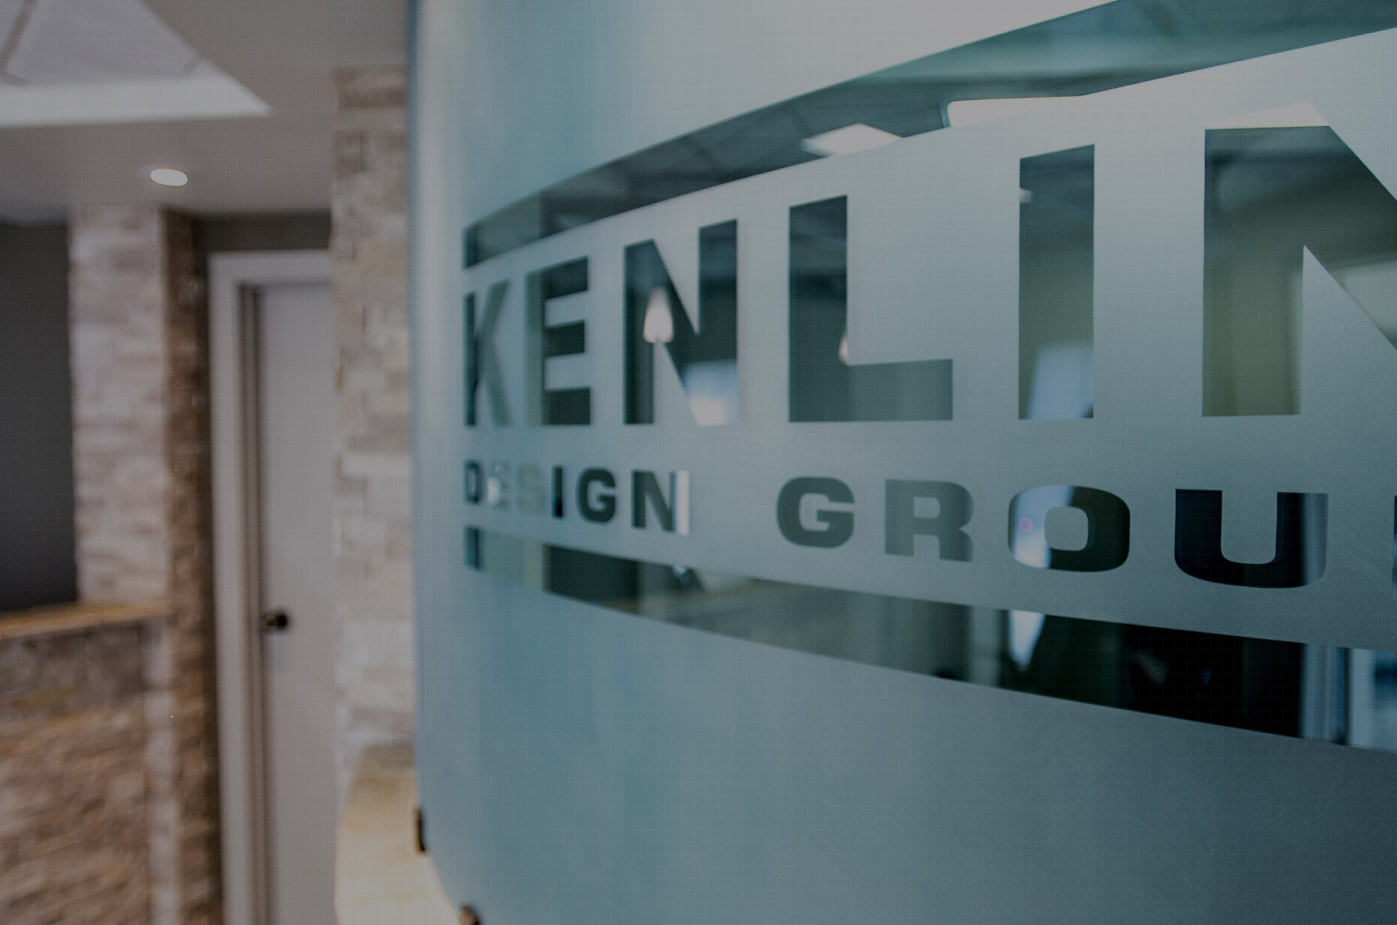 Kenlin Design Group